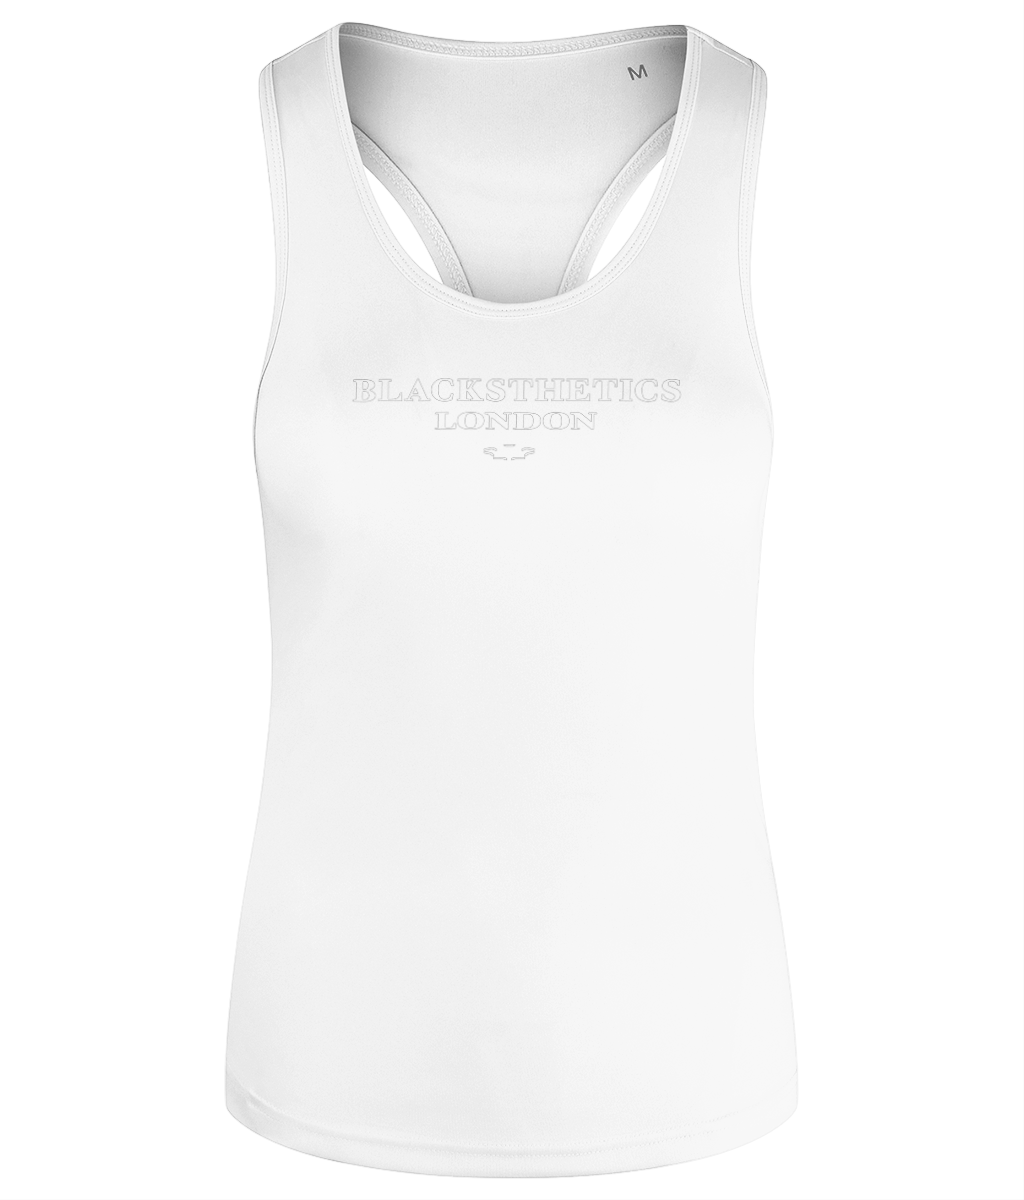 Women's Recycled Racerback Vest Blacksthetics Light weight Polyester Hoodie BS0444